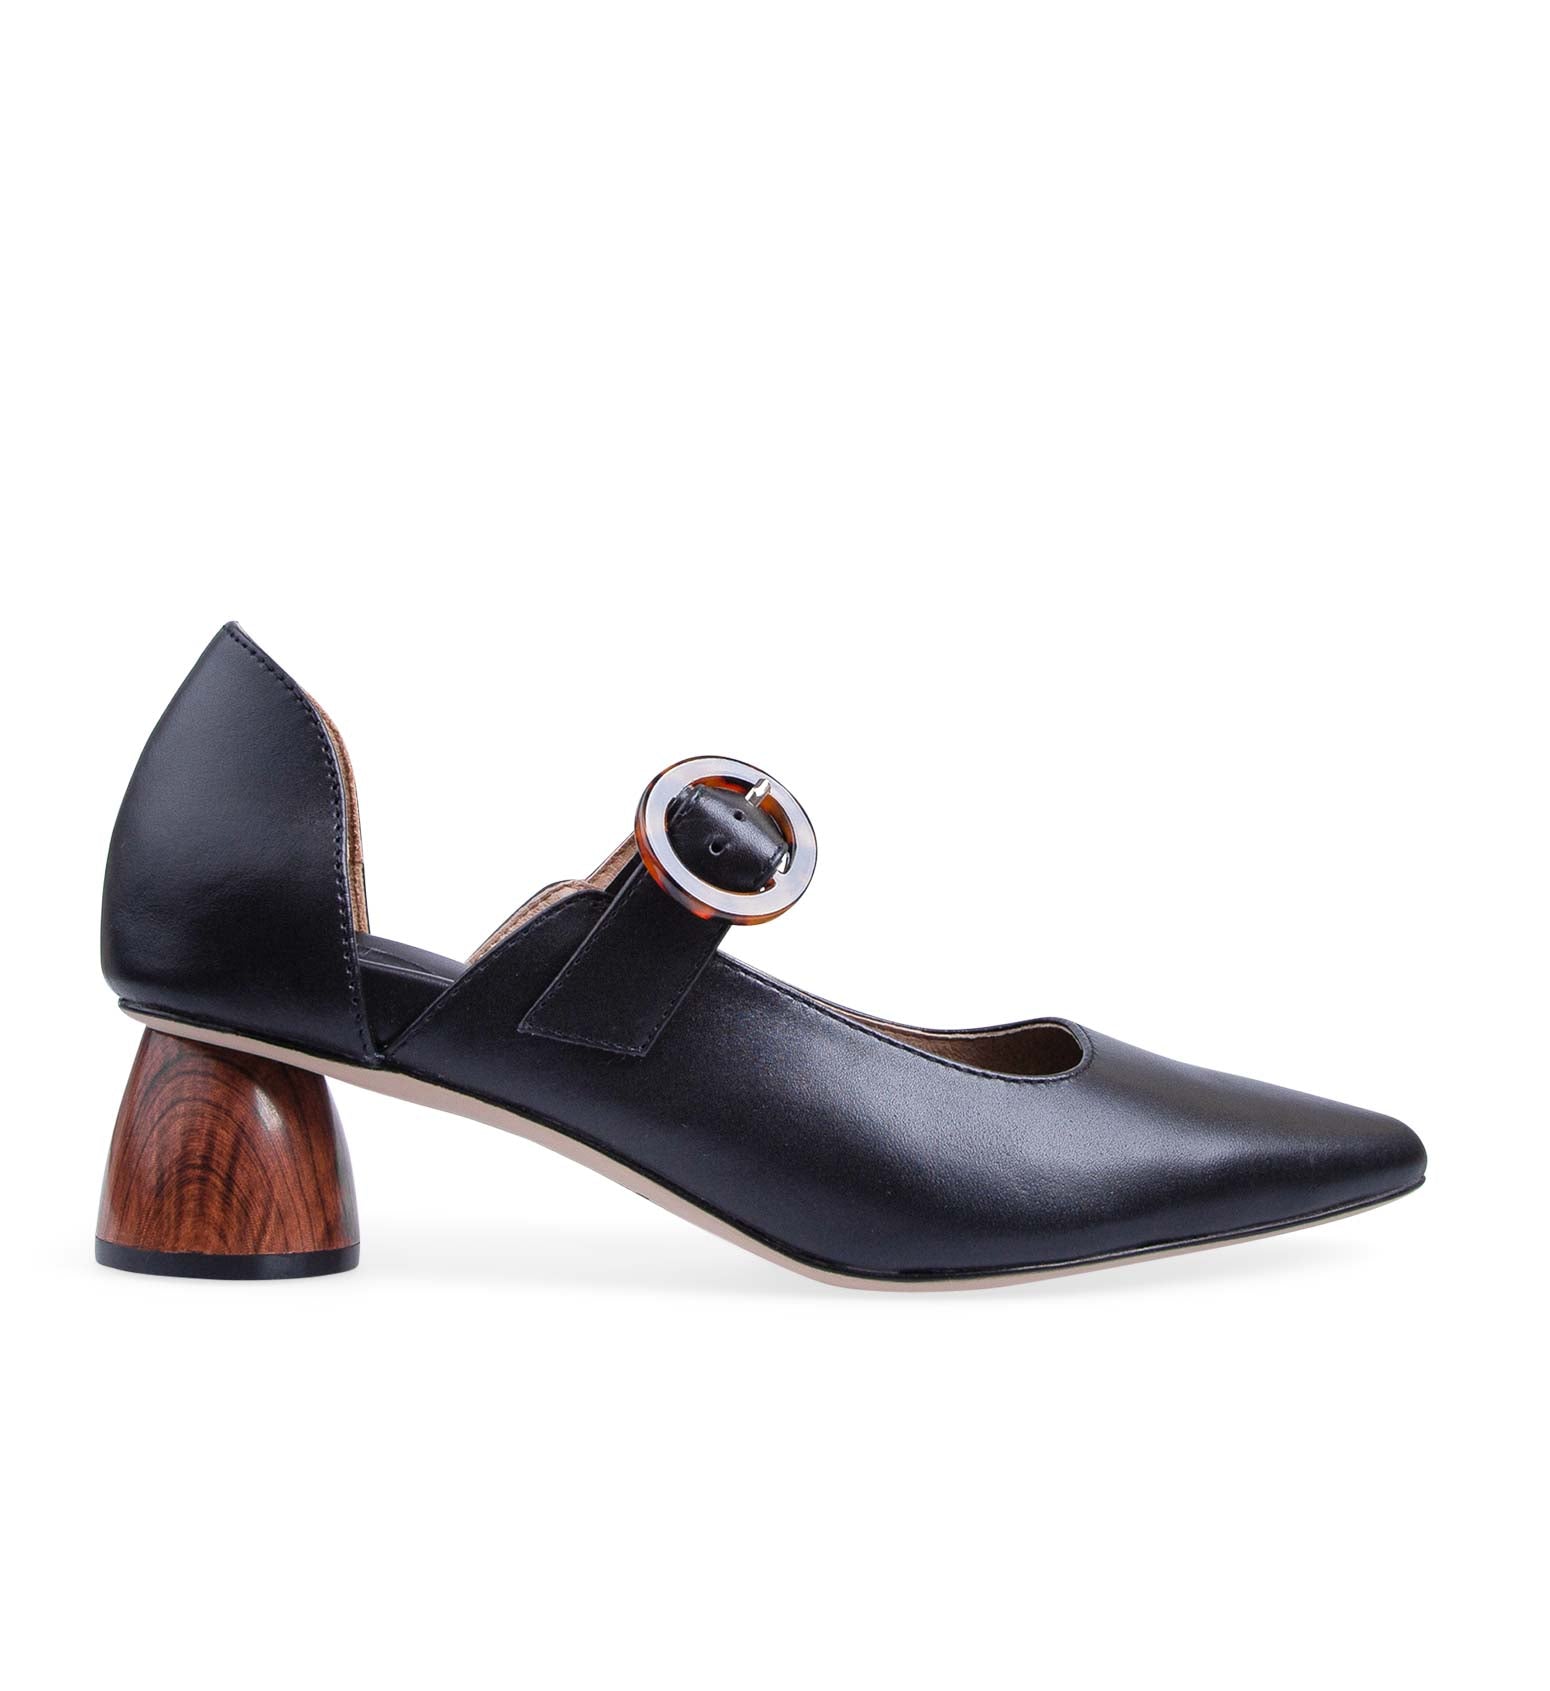 Macaw Black Low Heels | Bared Footwear